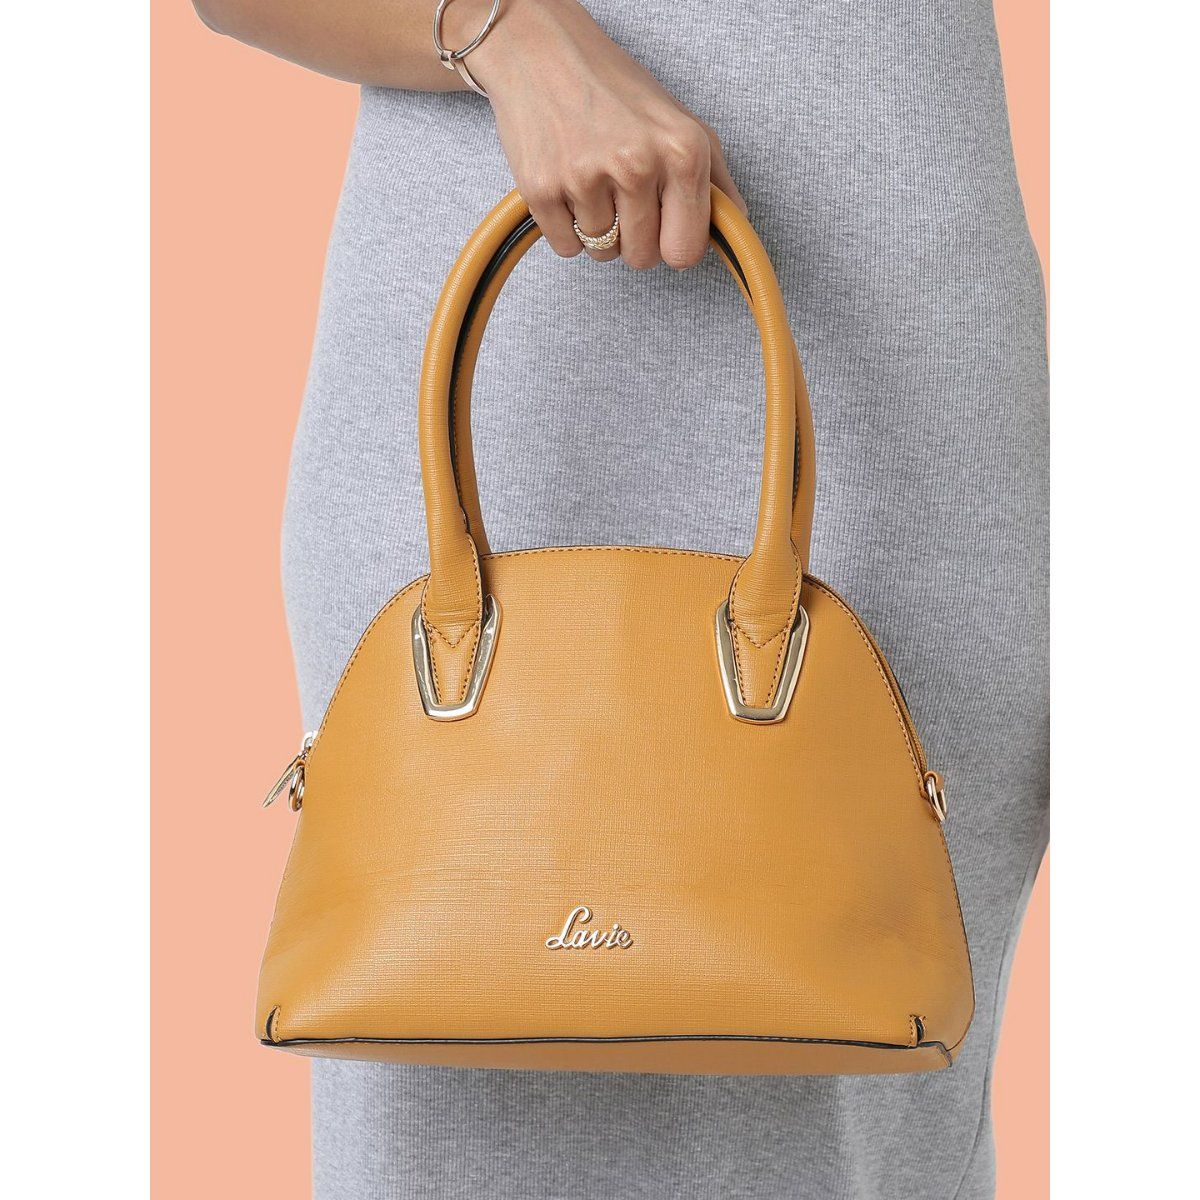 Buy LAVIE KALEY LG TOTE BAG Red Handbags Online at Best Prices in India   JioMart